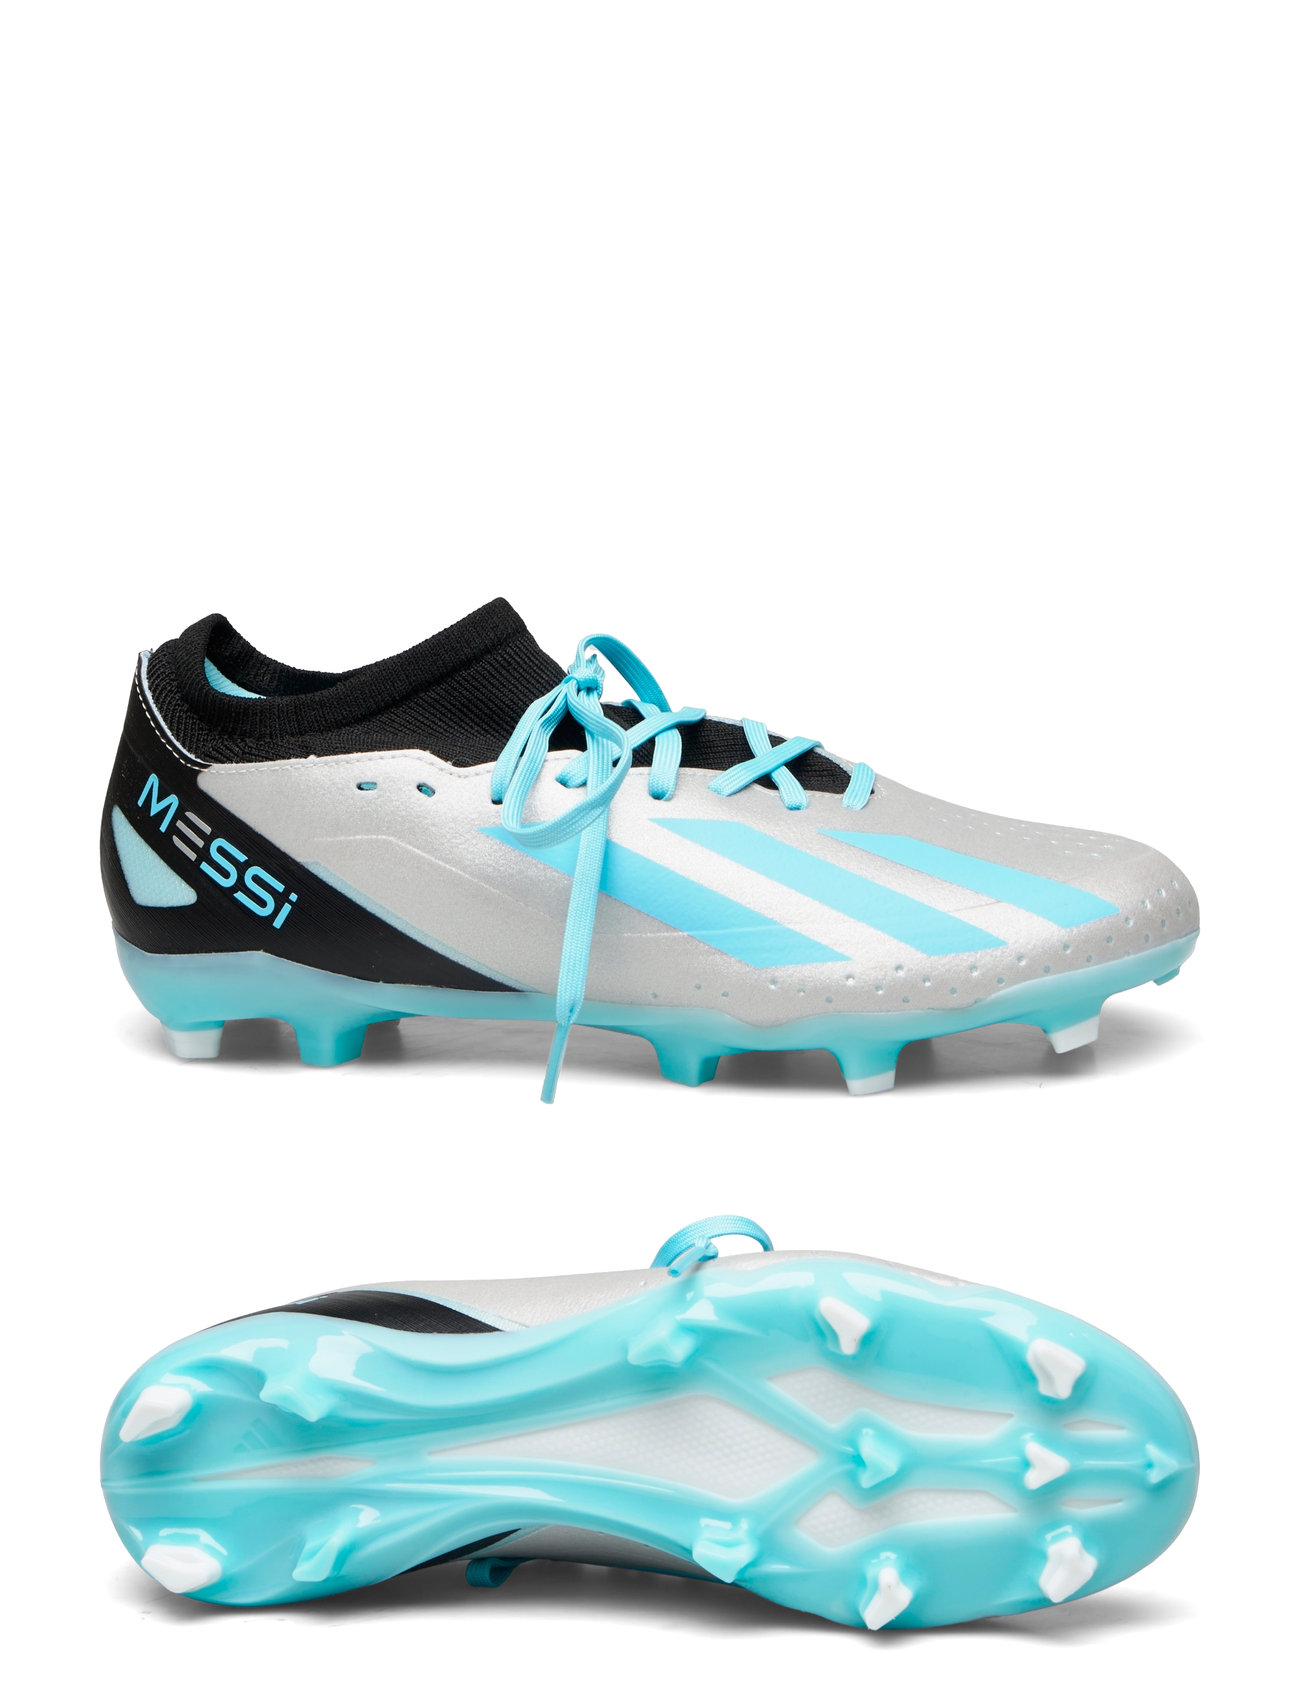 Adidas X Speedportal Messi 'Balon Te Adoro' Boots Released - Footy Headlines